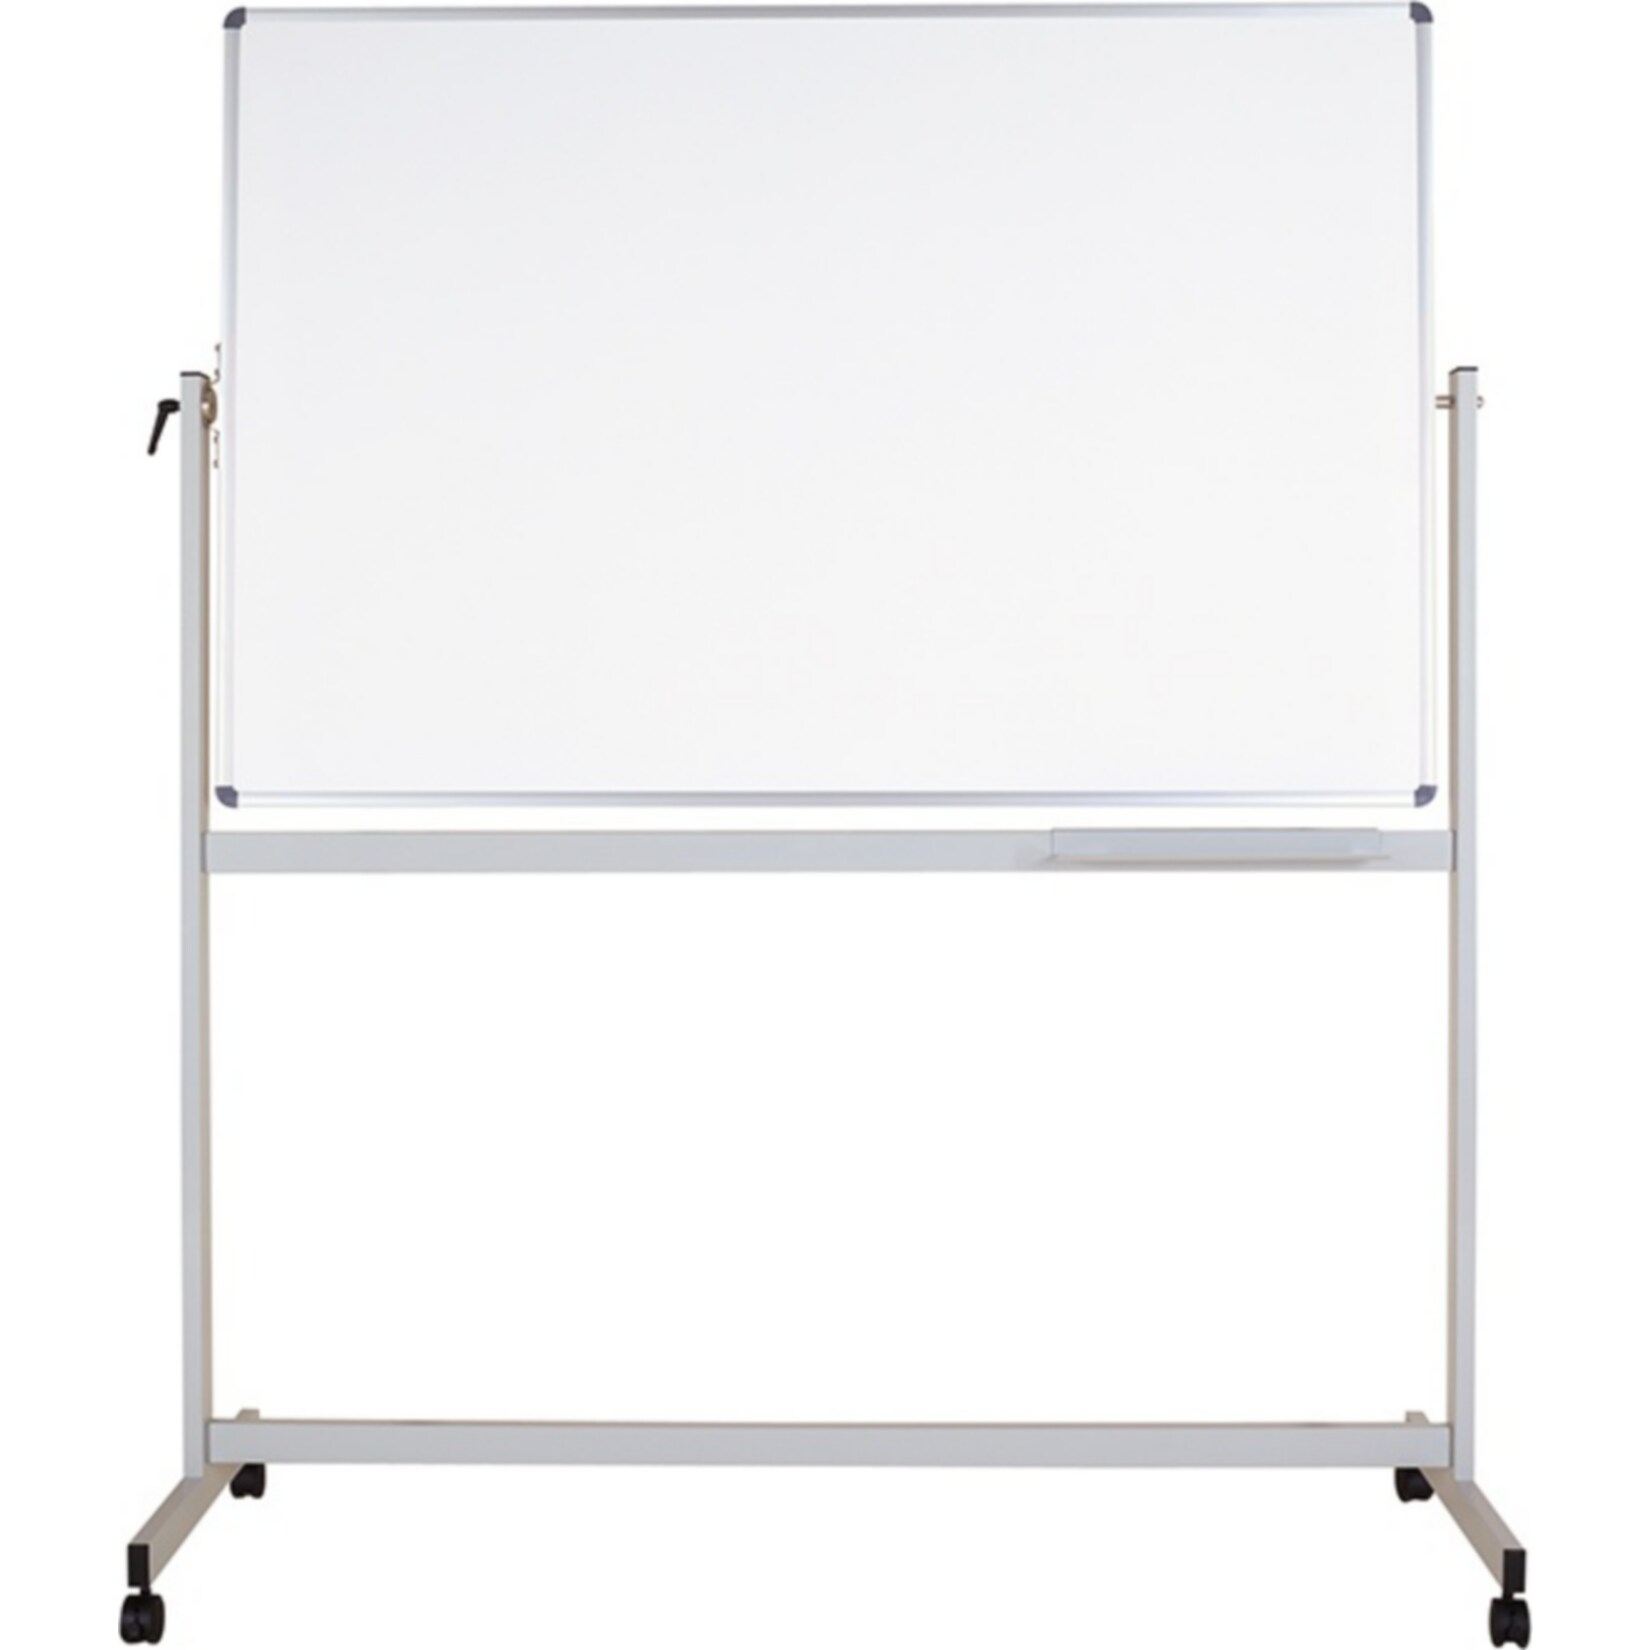 MAUL Mobiles Whiteboard MAULstandard, drehbar - 120 x 220 cm